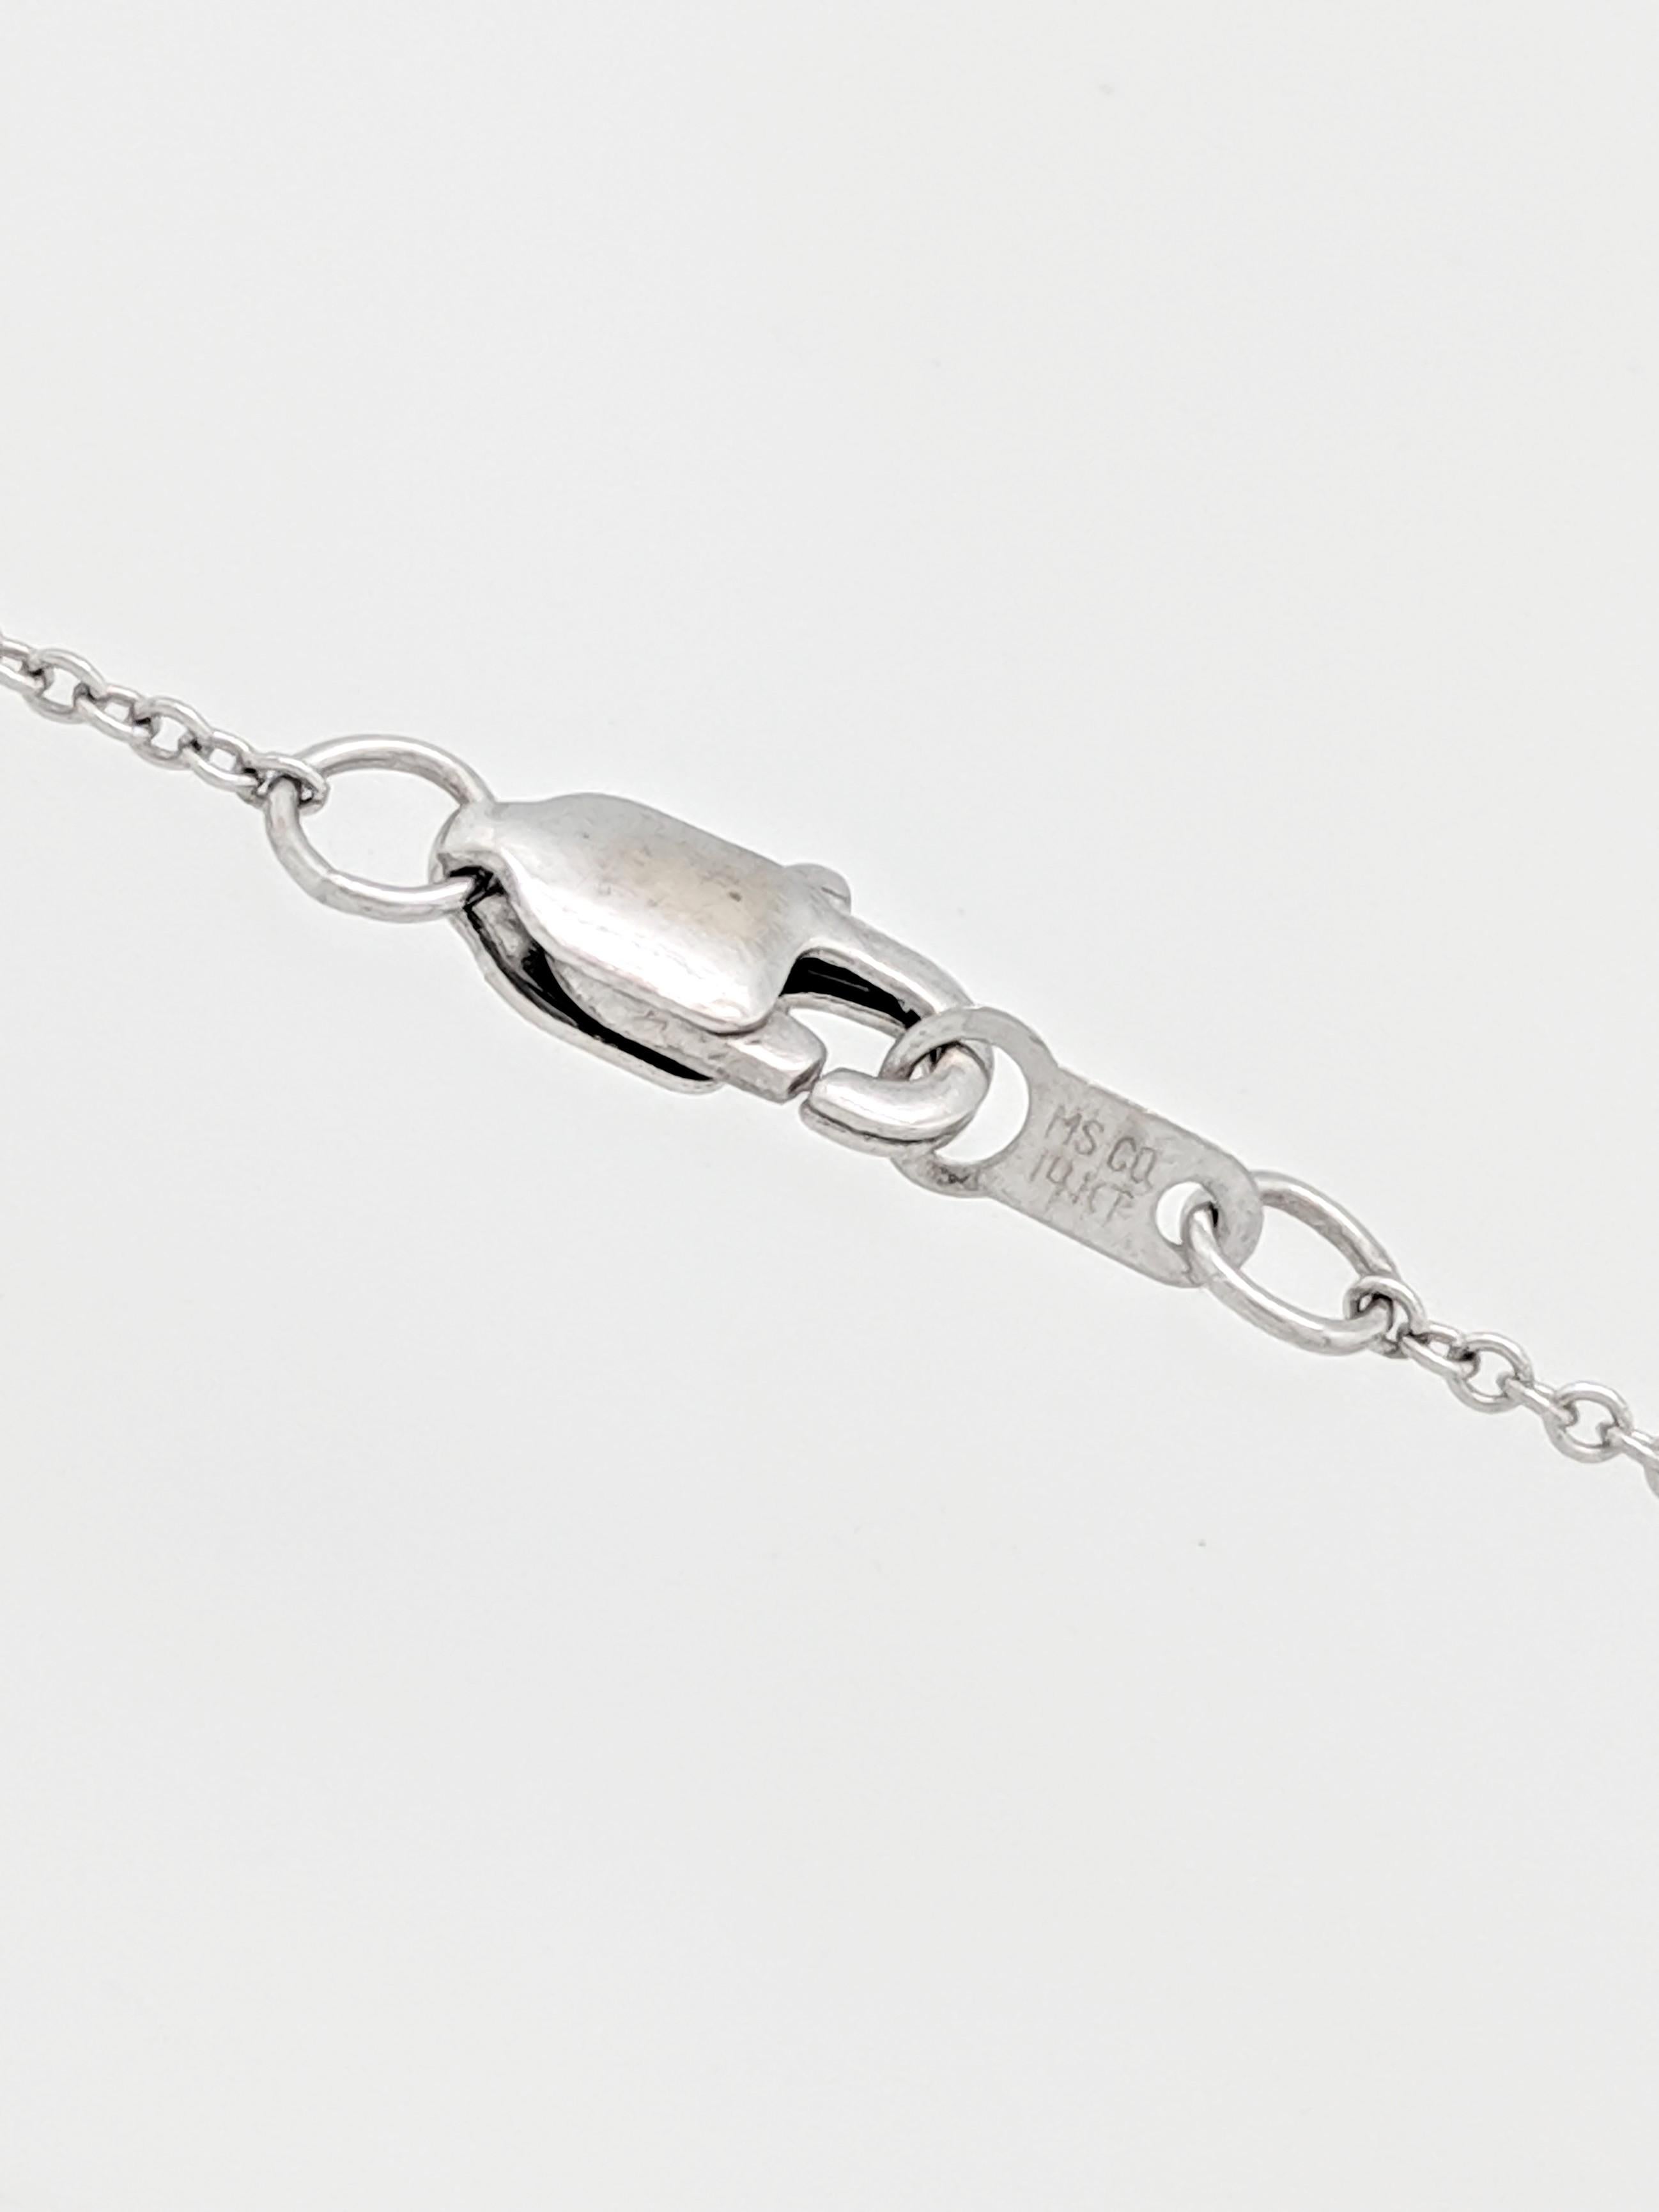 14 Karat White Gold .57 Carat Princess Cut Diamond Square Halo Pendant Necklace For Sale 5